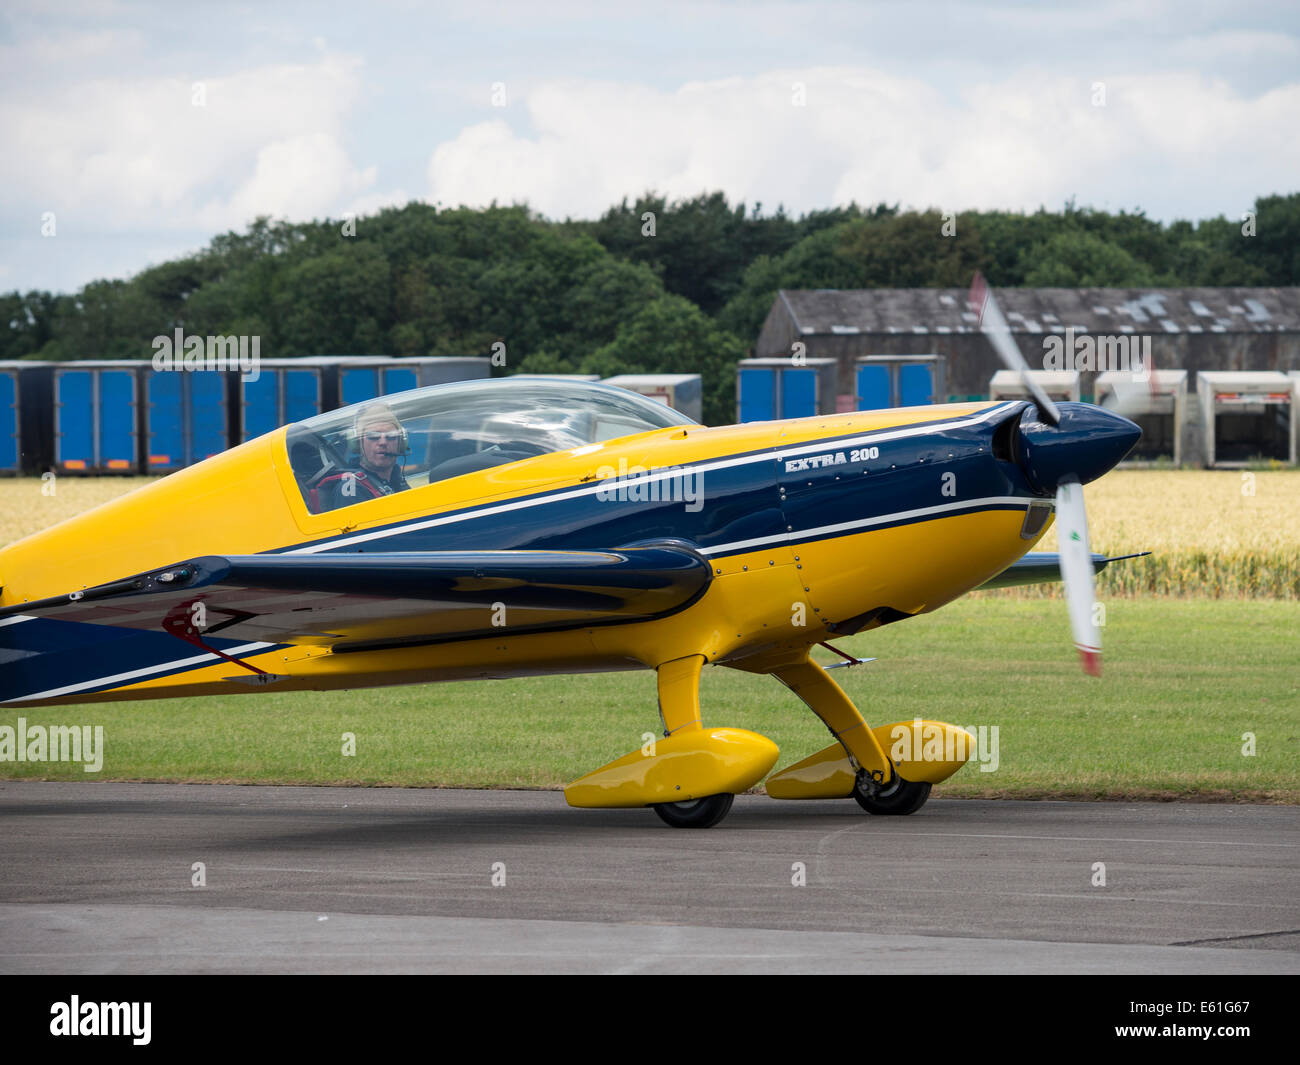 An Extra 200 aerobatic stunt aircraft at Breighton airfield, Yorkshire, UK Stock Photo